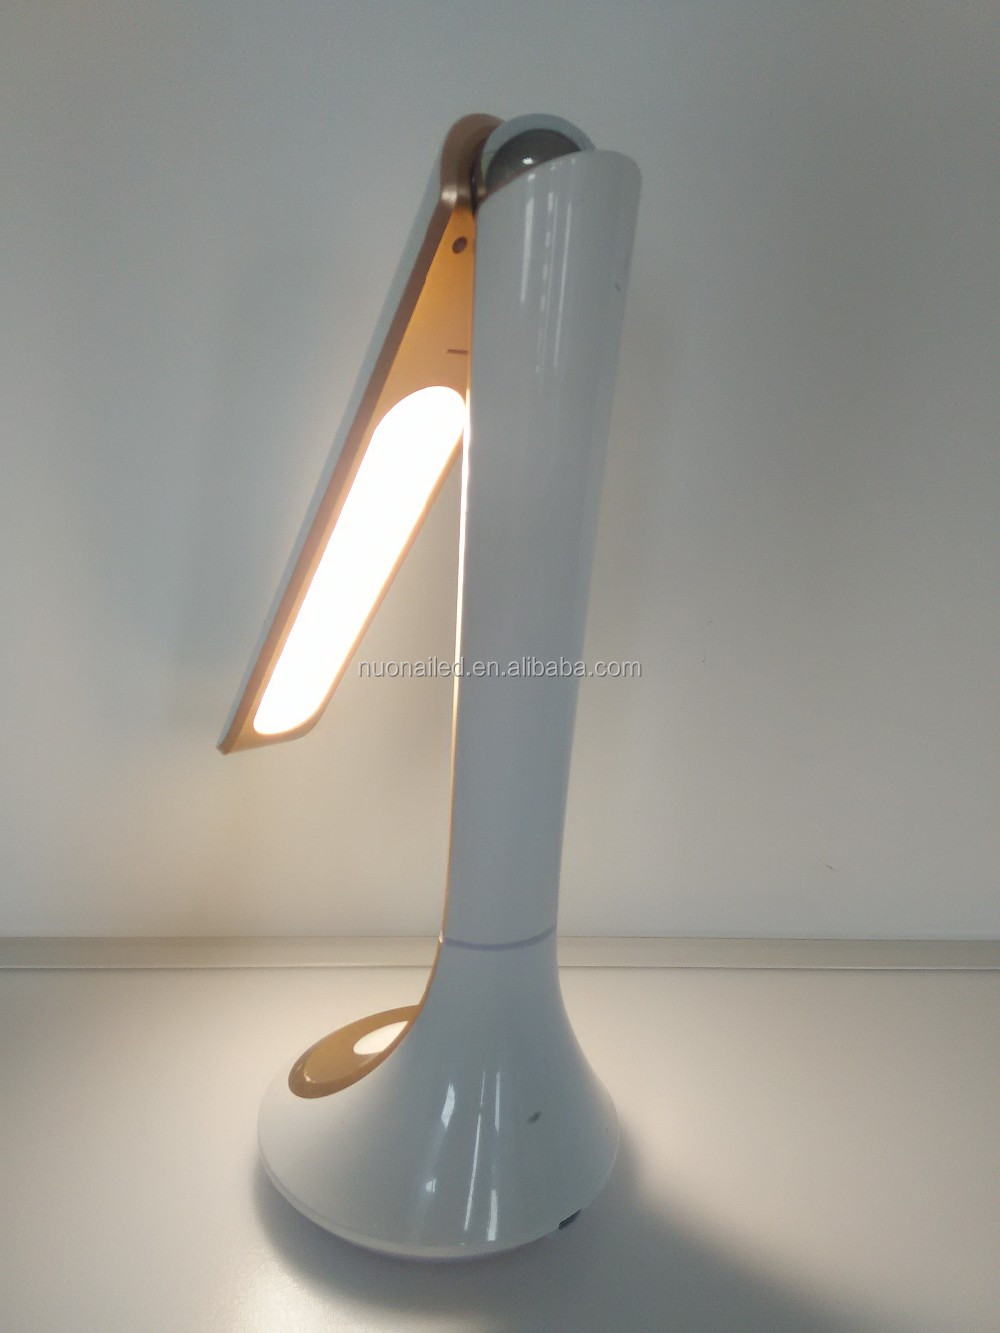 Ledランプの家調光可能と調整可能なledポータブルテーブルランプ用マニキュア仕入れ・メーカー・工場